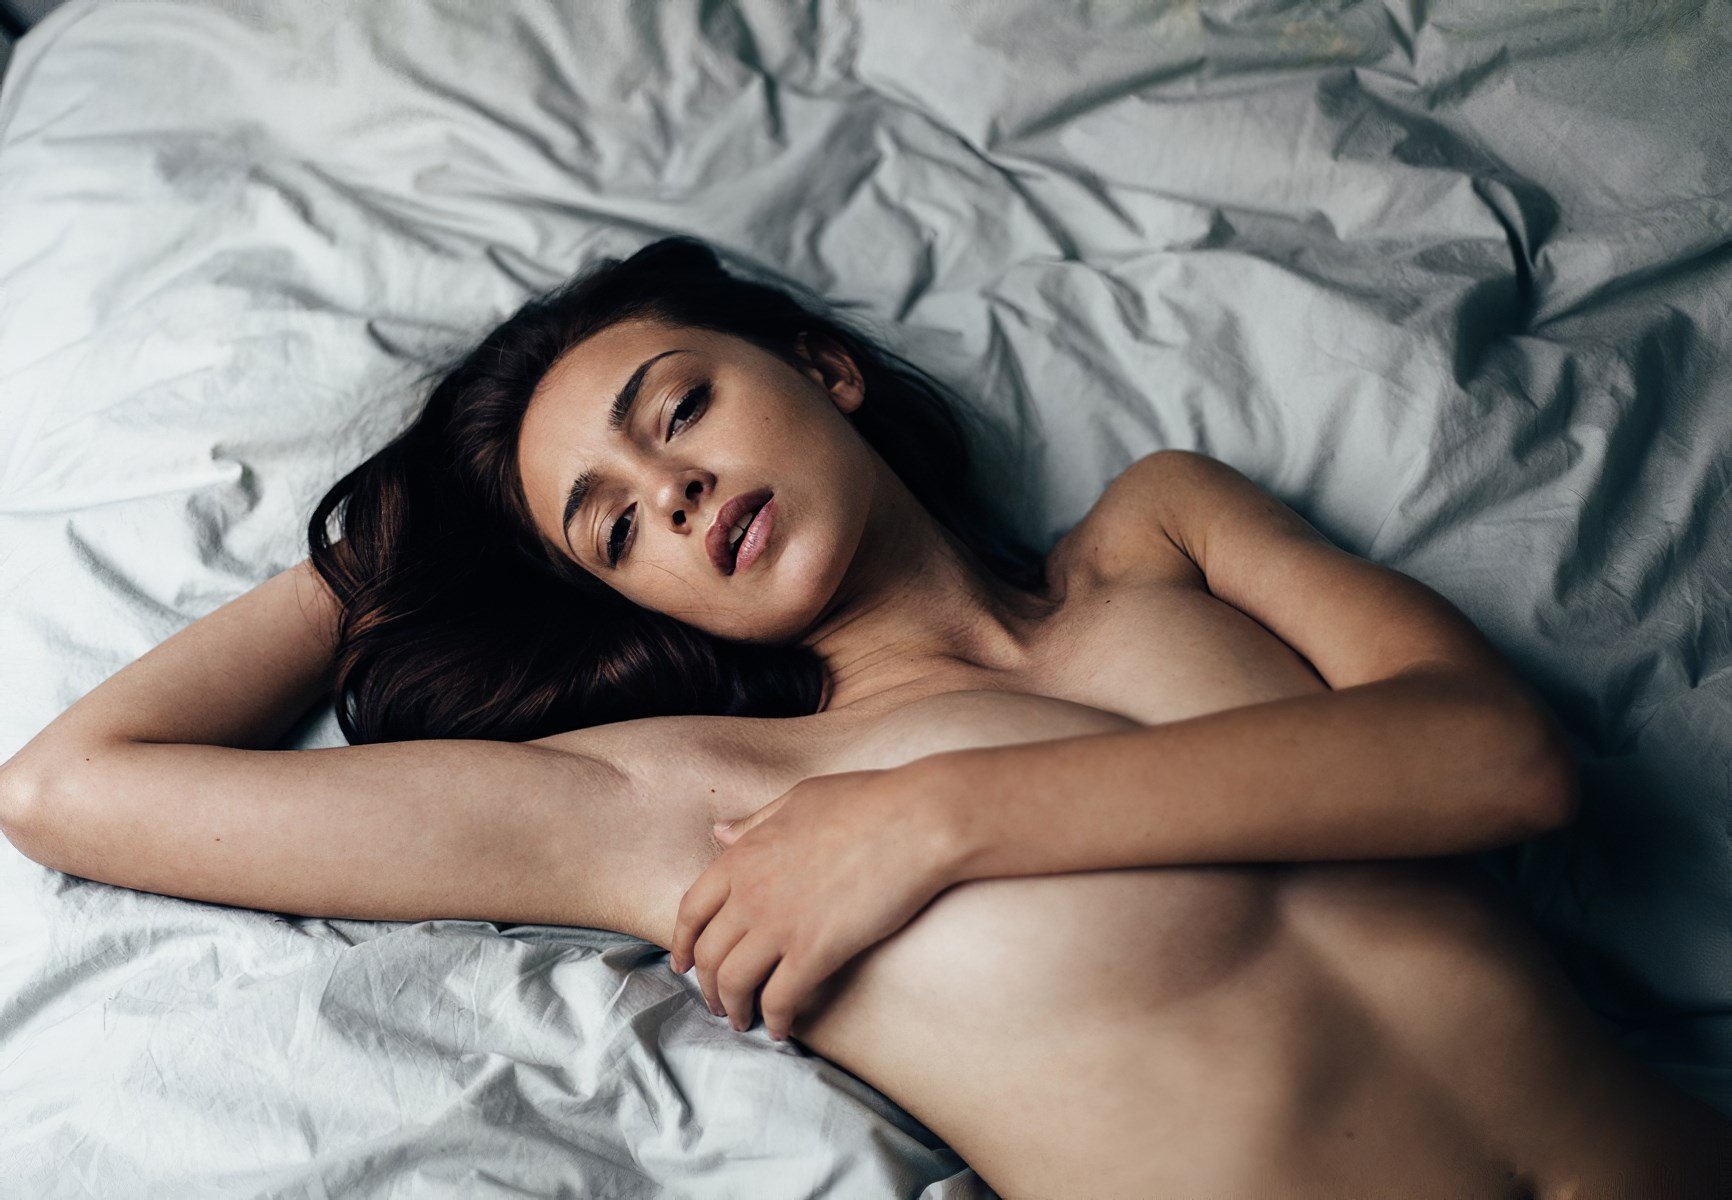 Josephine Lecar Nude Photos Ultimate Collection.